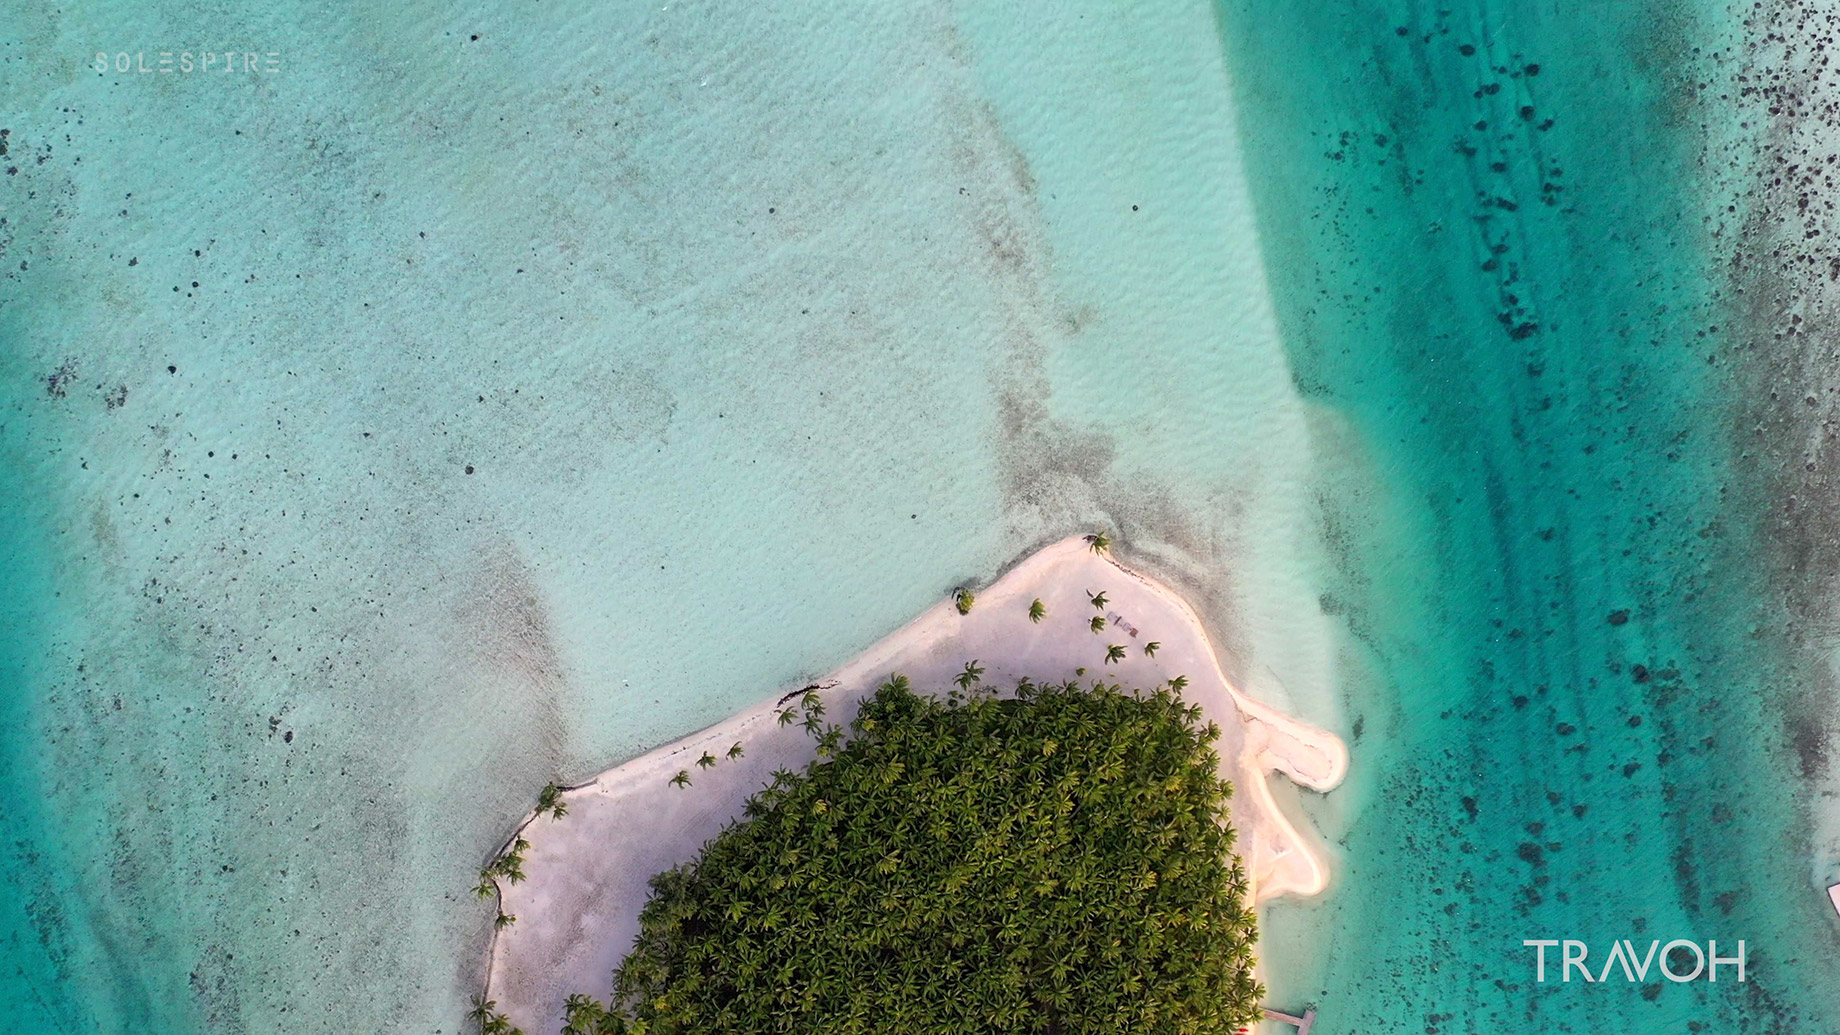 Surreal Ambient Drone Landing - Motu Tane Island - Bora Bora, French Polynesia - 4K Travel Video